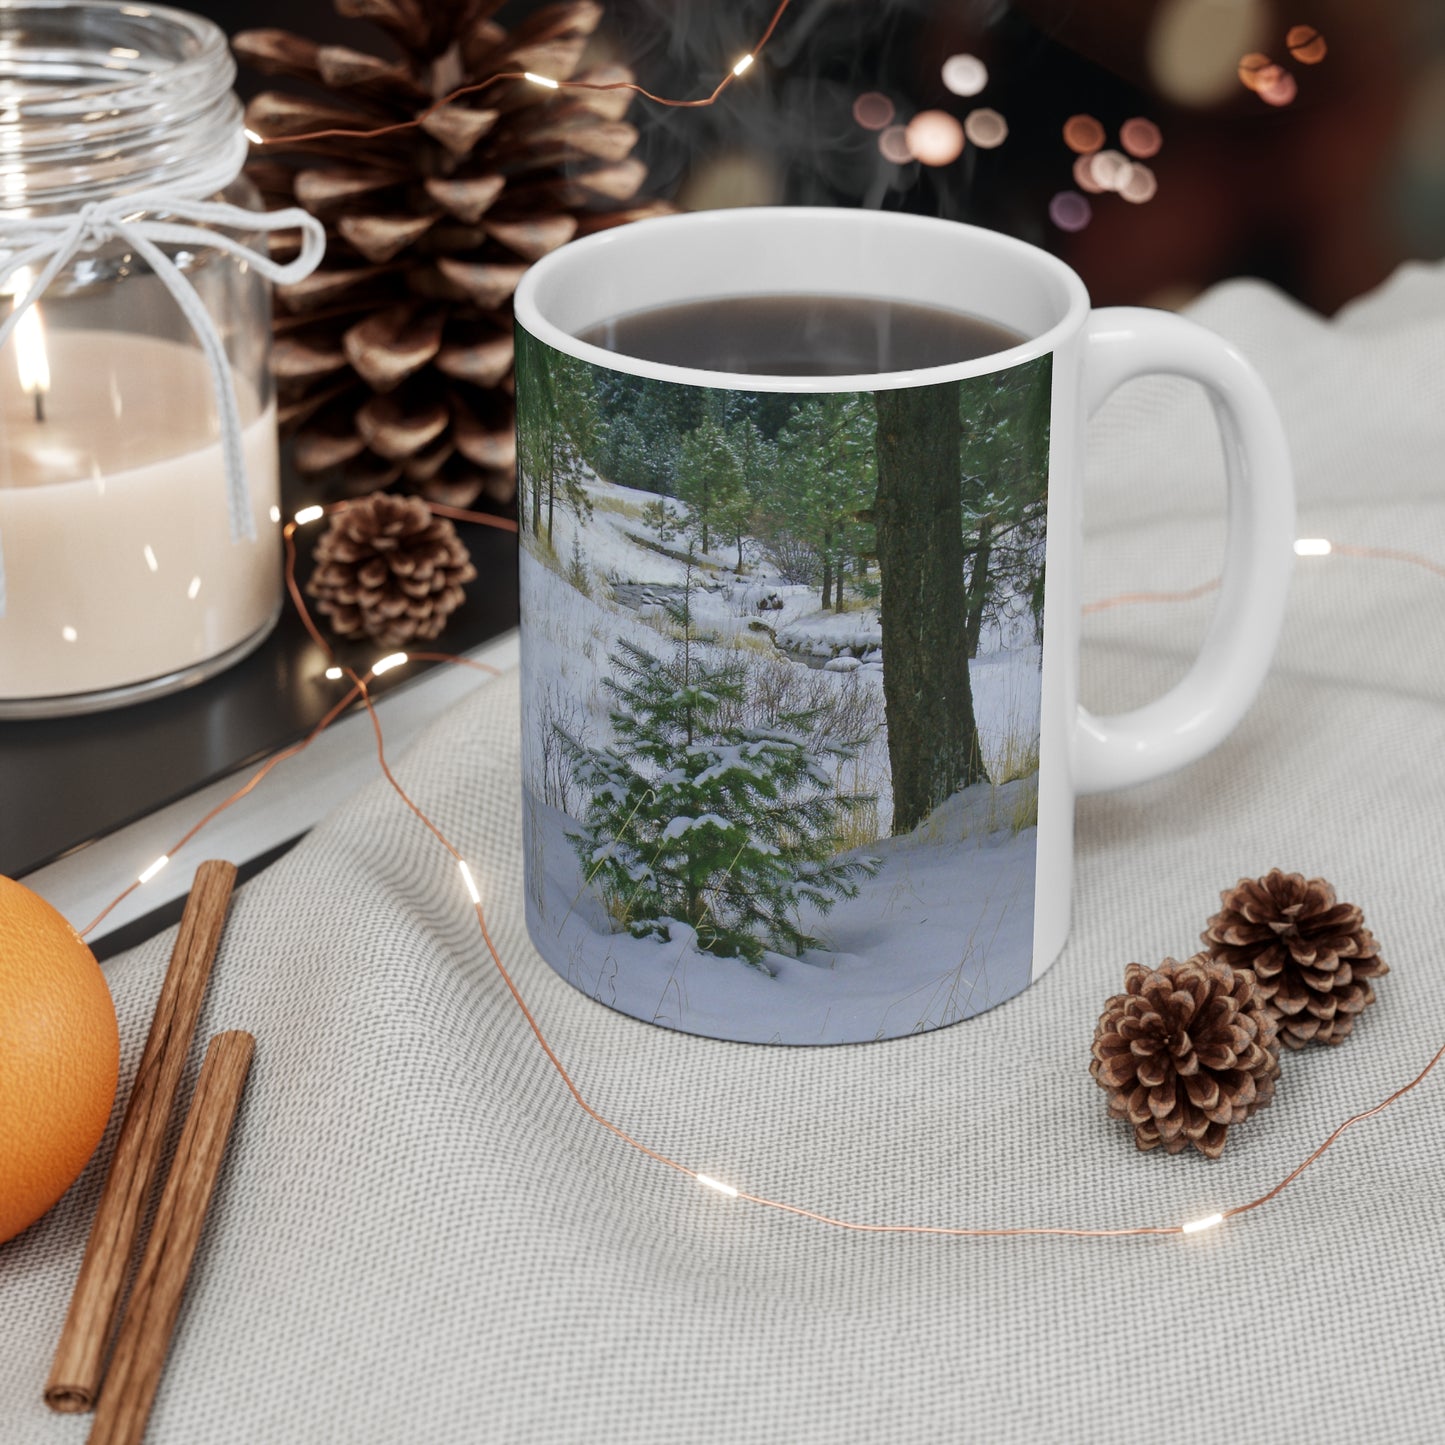 Christmas Tree Creek Ceramic Mug 11oz